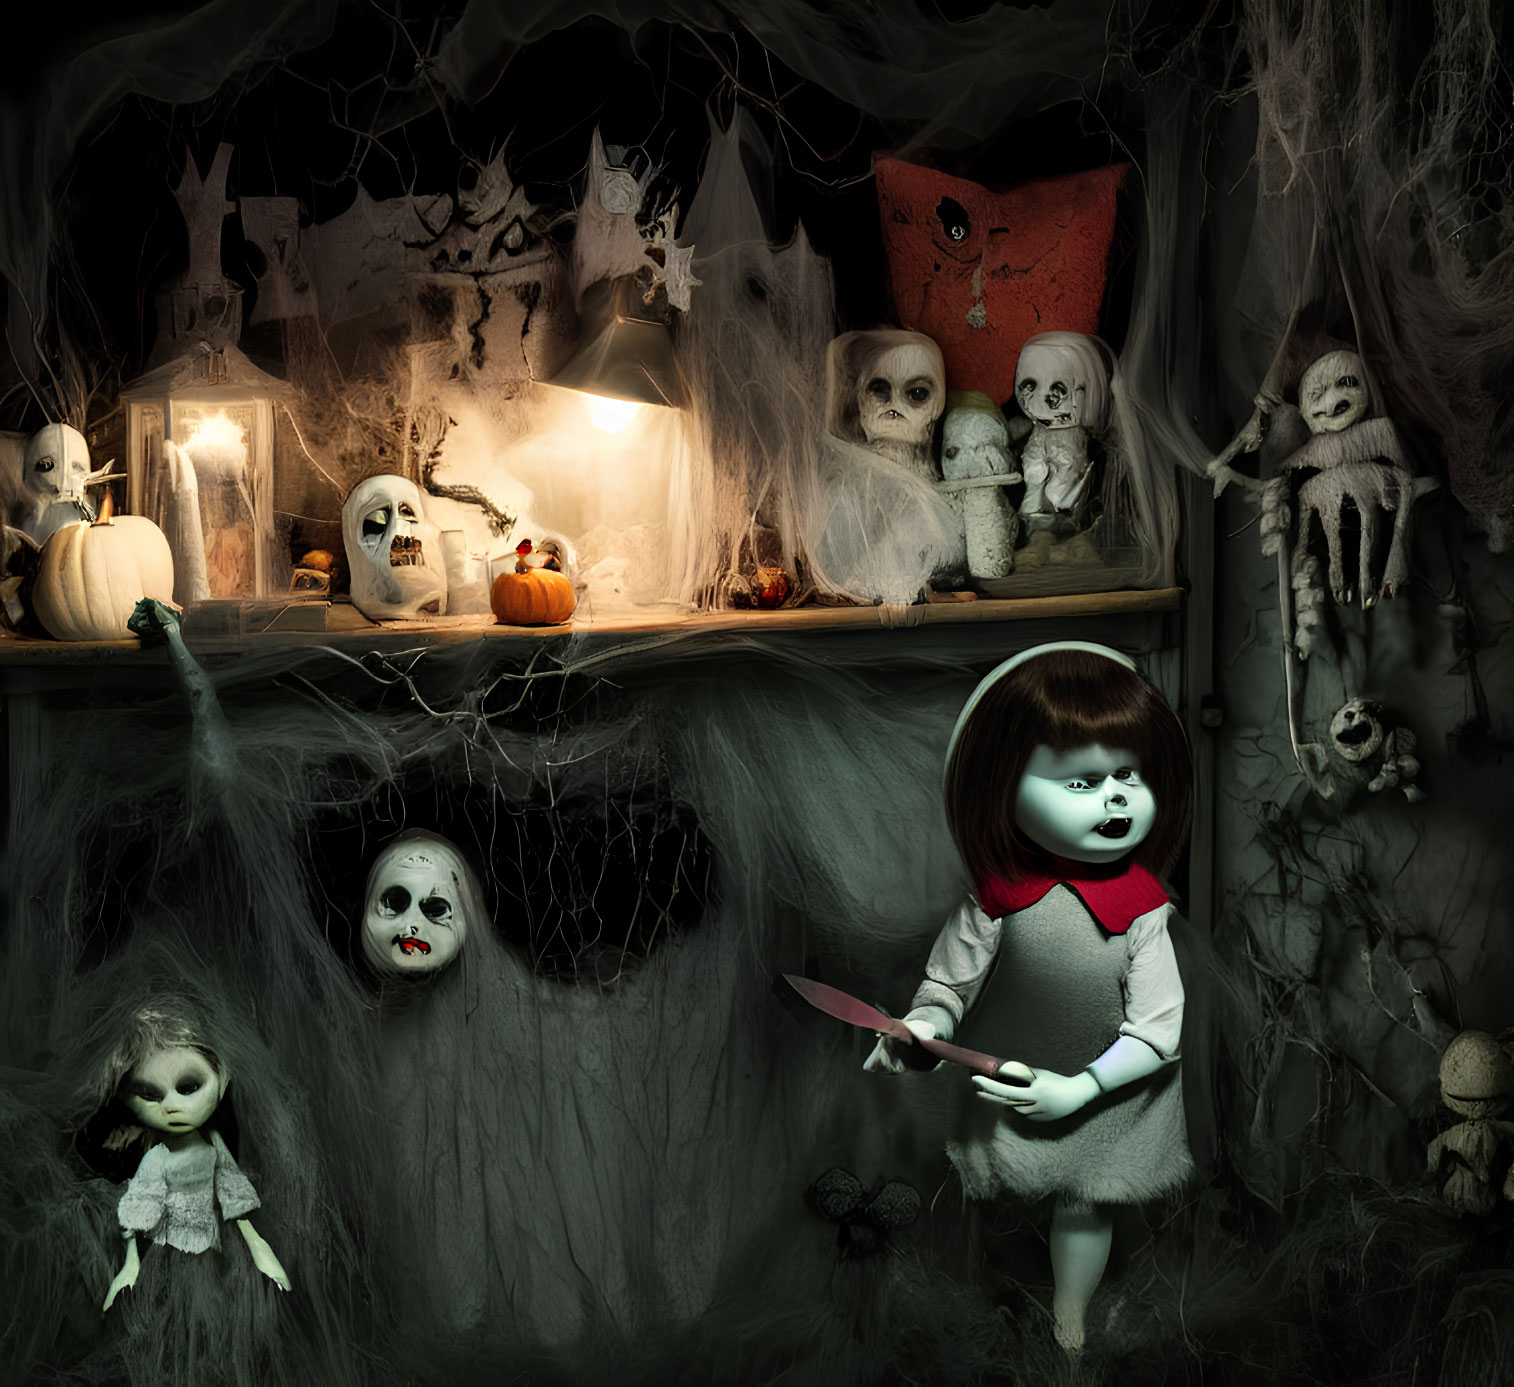 Creepy Halloween scene with dolls, pumpkins, skulls, and knife-wielding figure